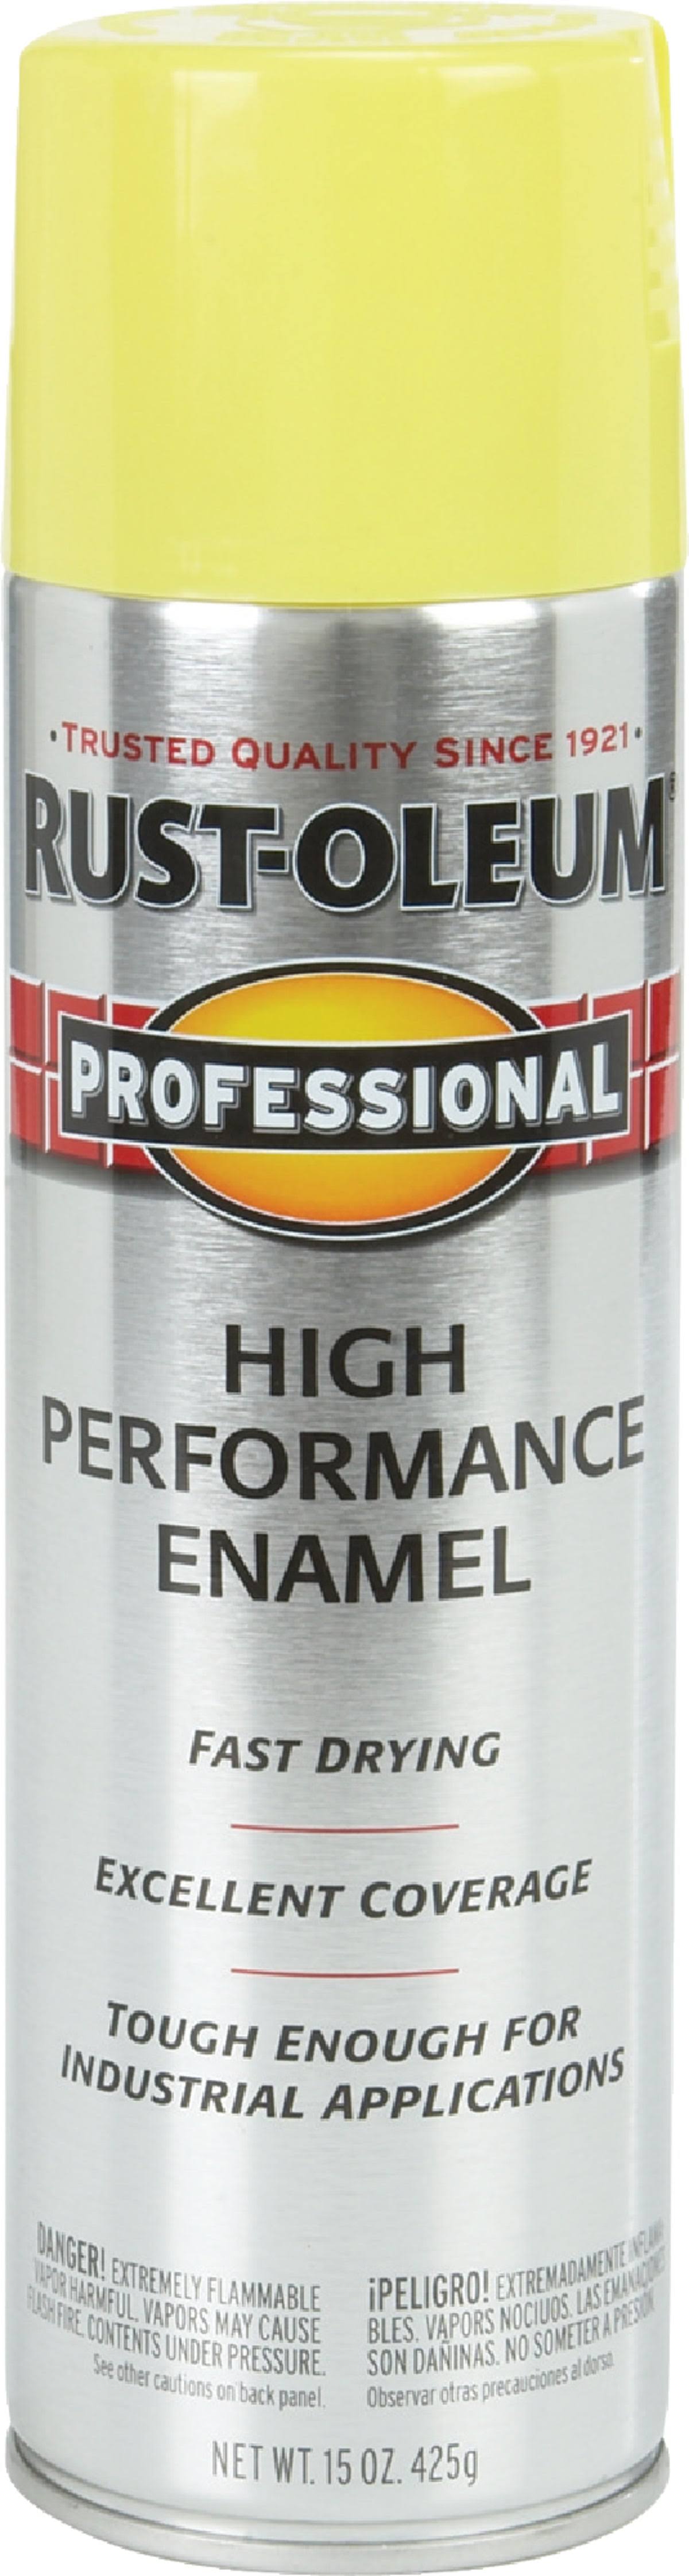 Rust-Oleum 7543838 Professional High Performance Enamel Spray Paint - Safety Yellow, 15oz